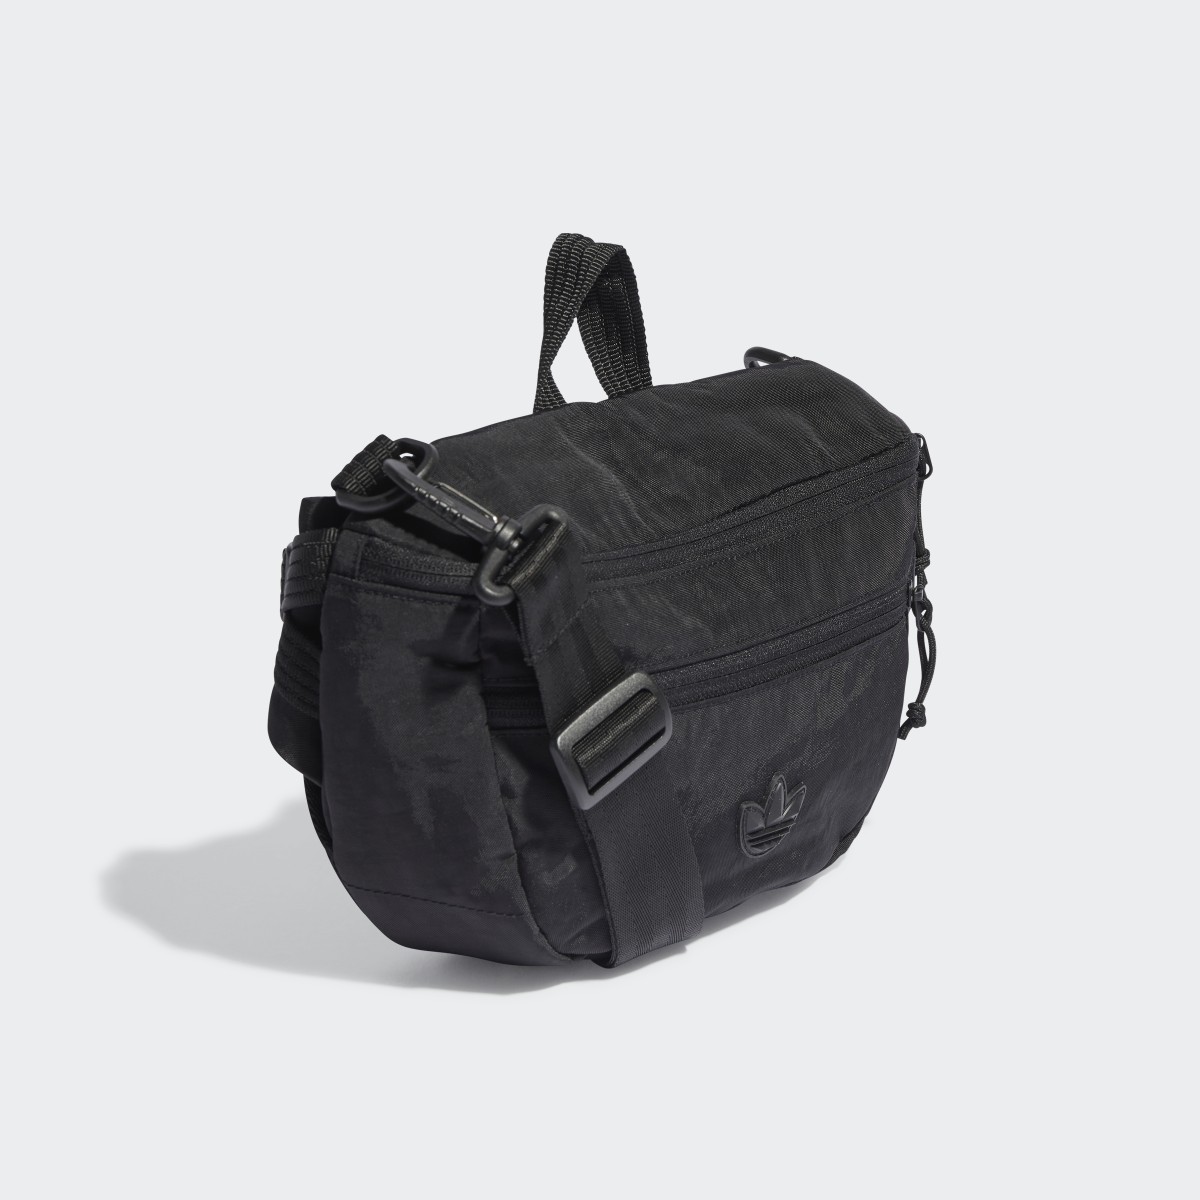 Adidas Adventure Waist Bag. 4